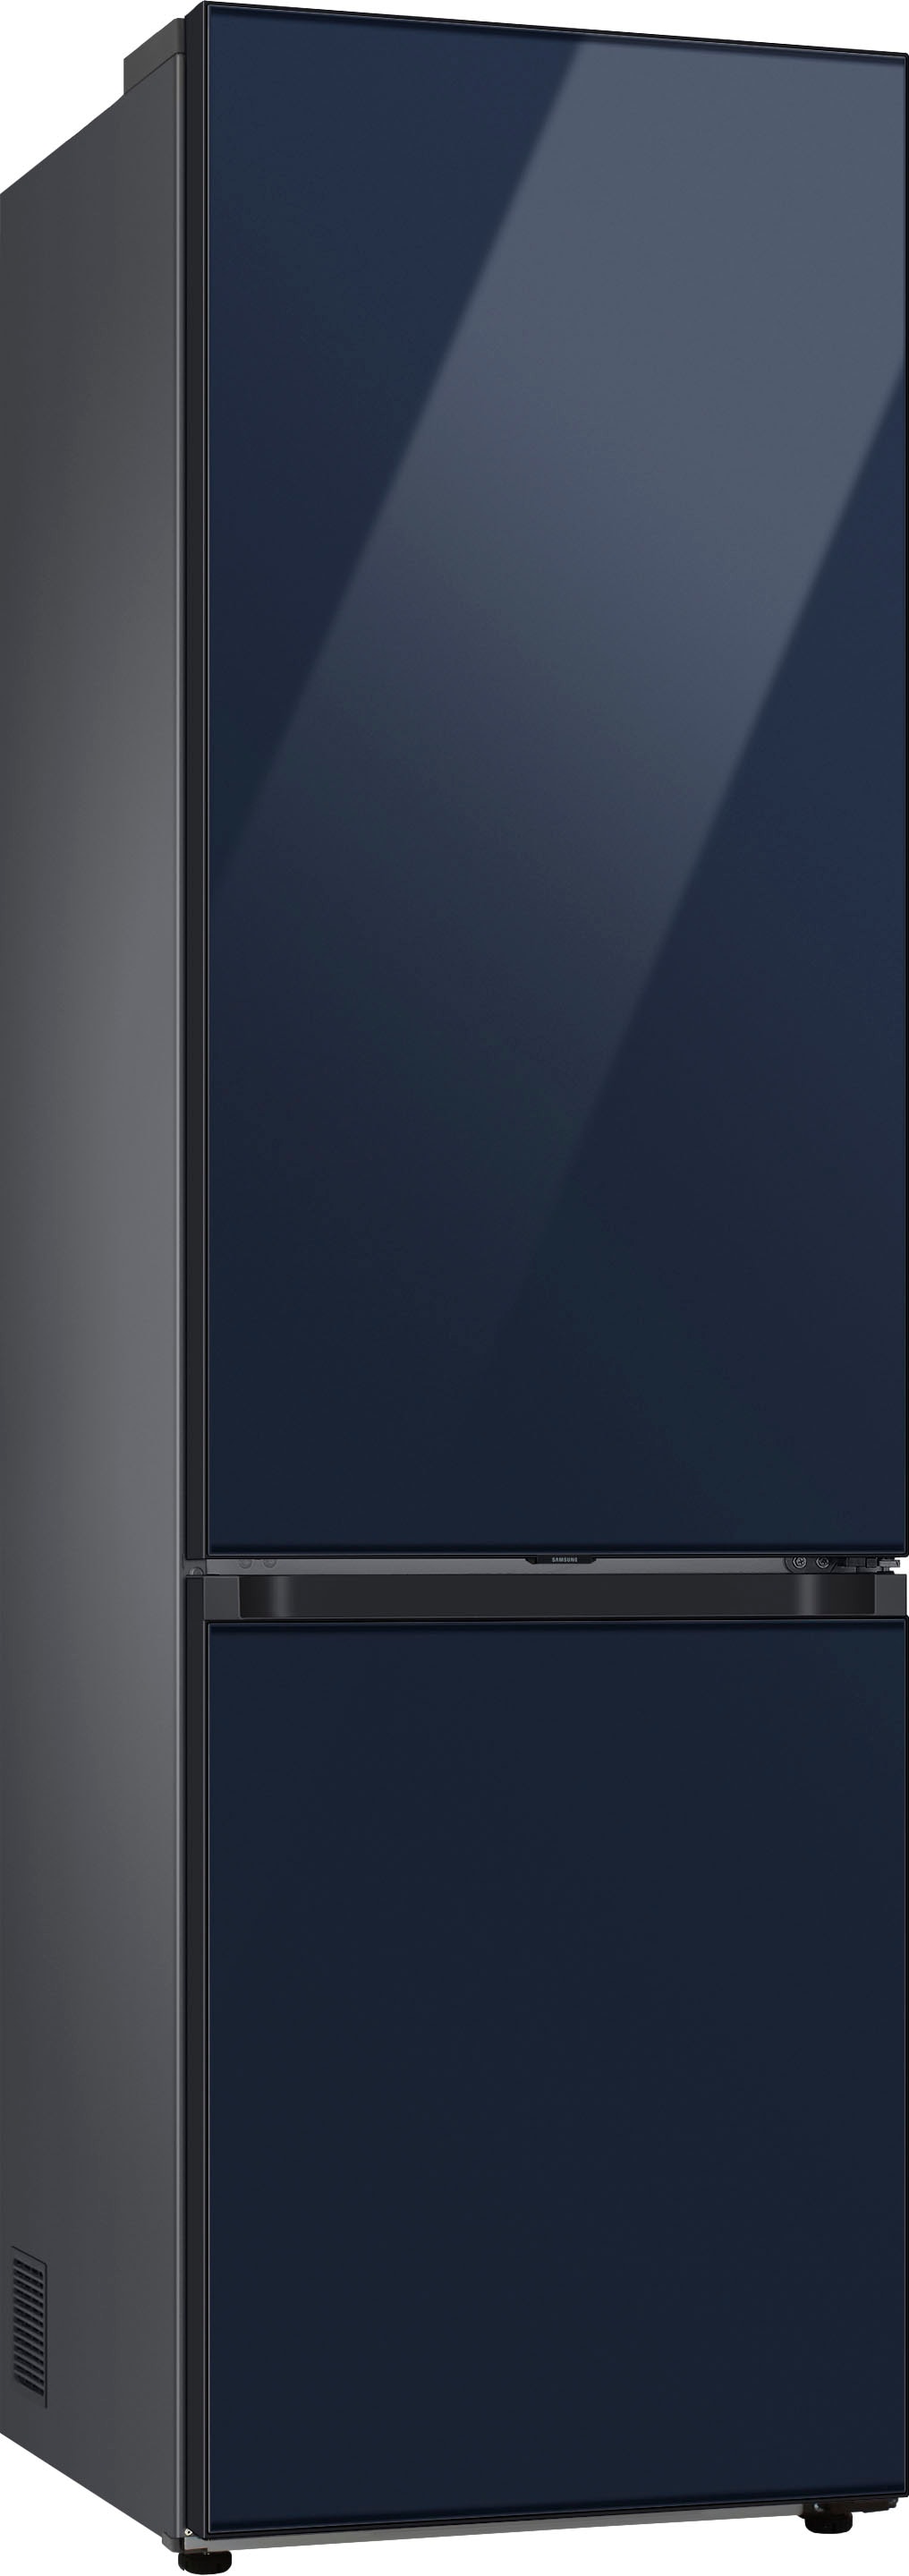 Samsung Kühl-/Gefrierkombination »RL38C6B6C41«, RL38C6B6C41, 203 cm hoch, 59,5 cm breit